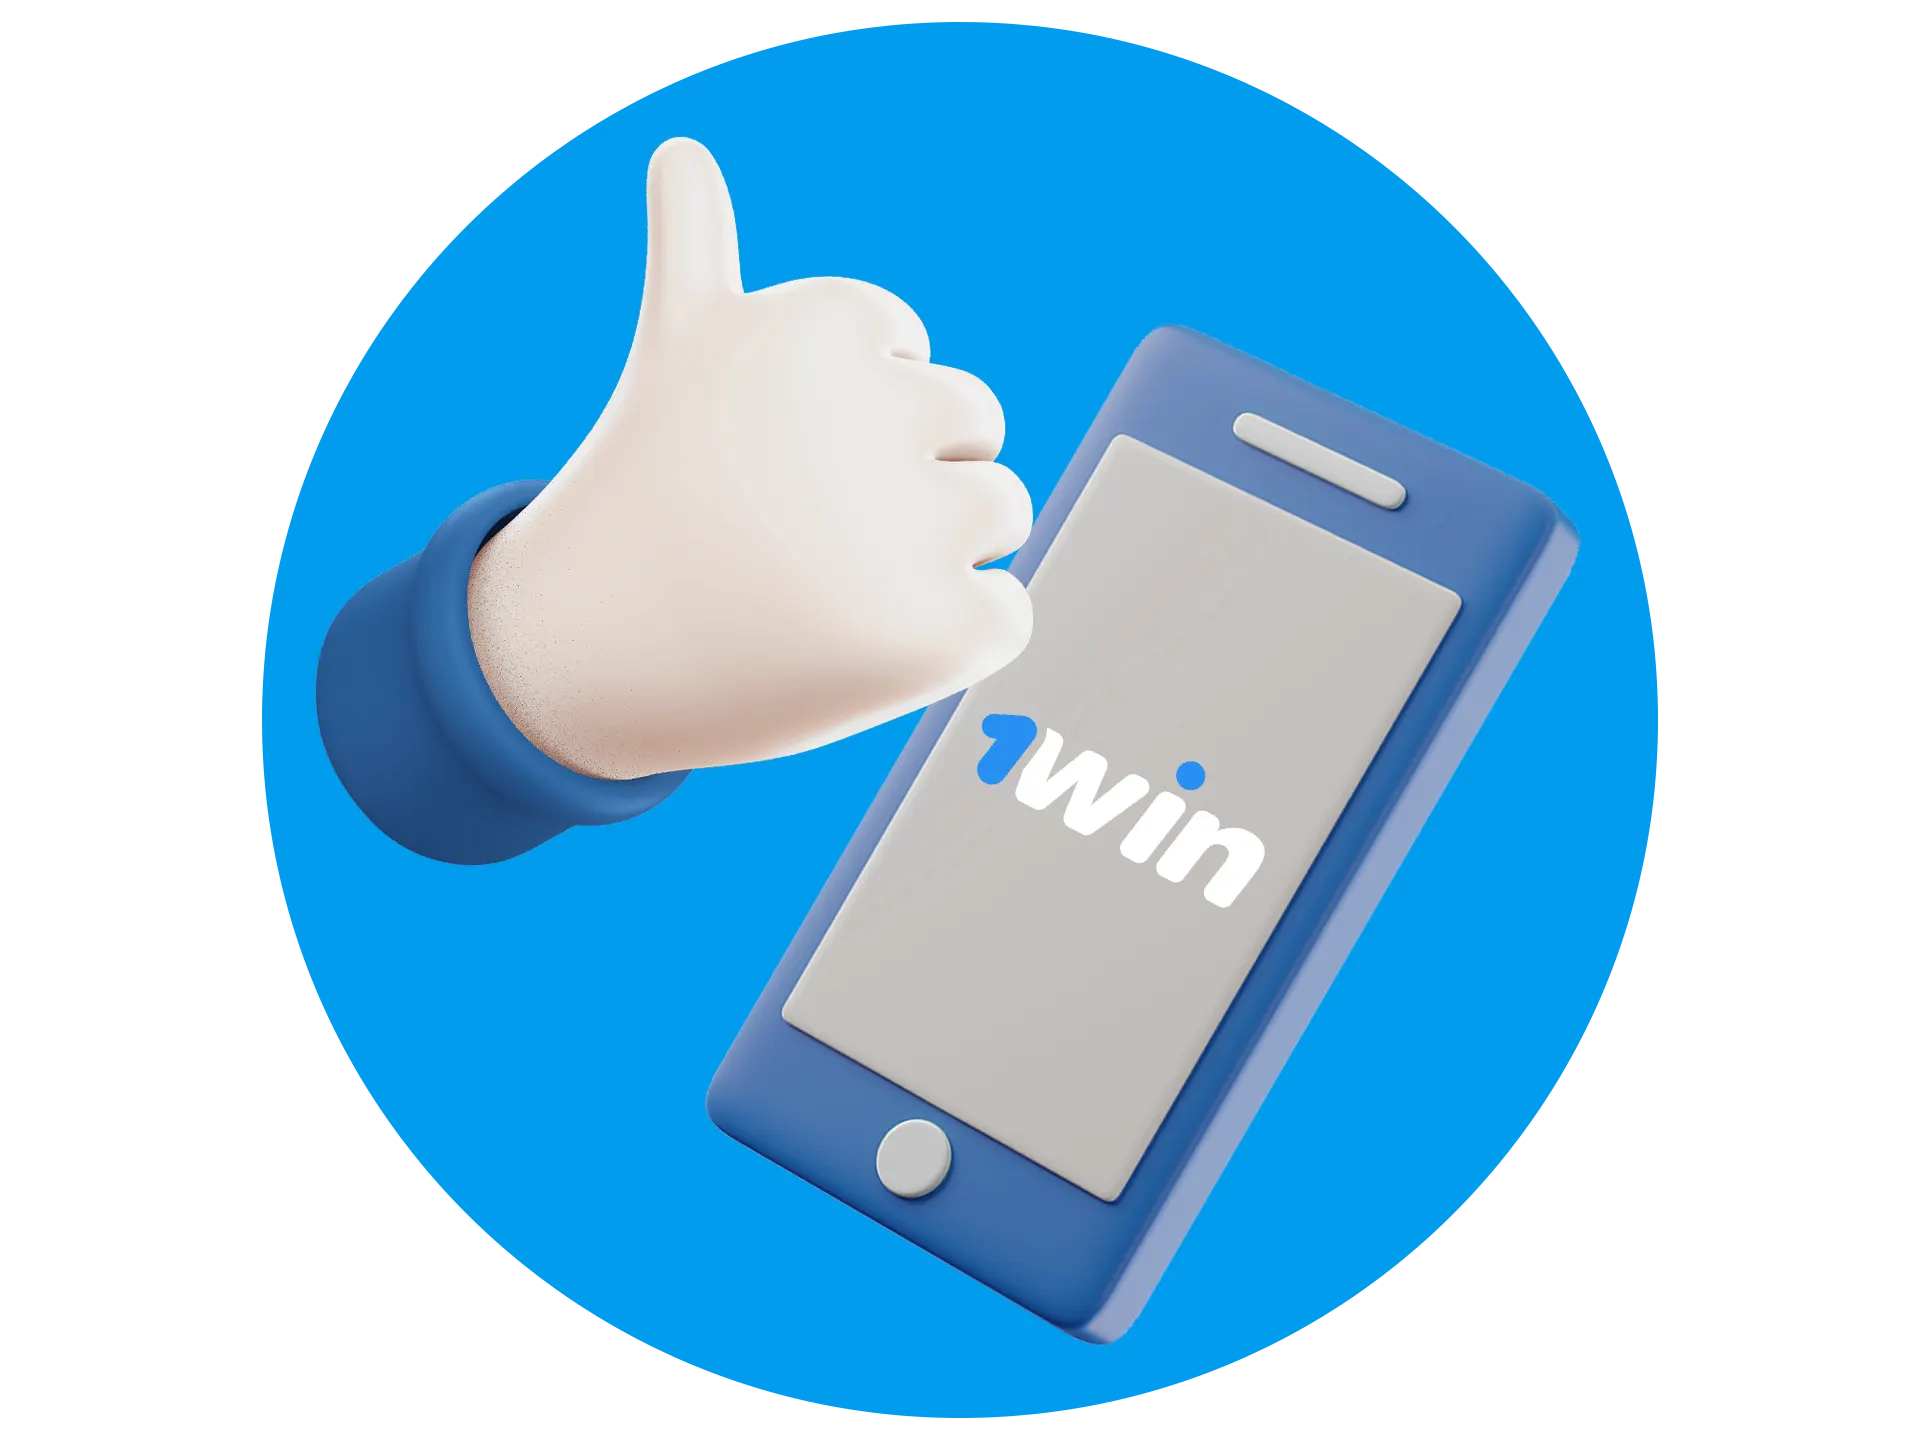 1win app has a user-friendly design.